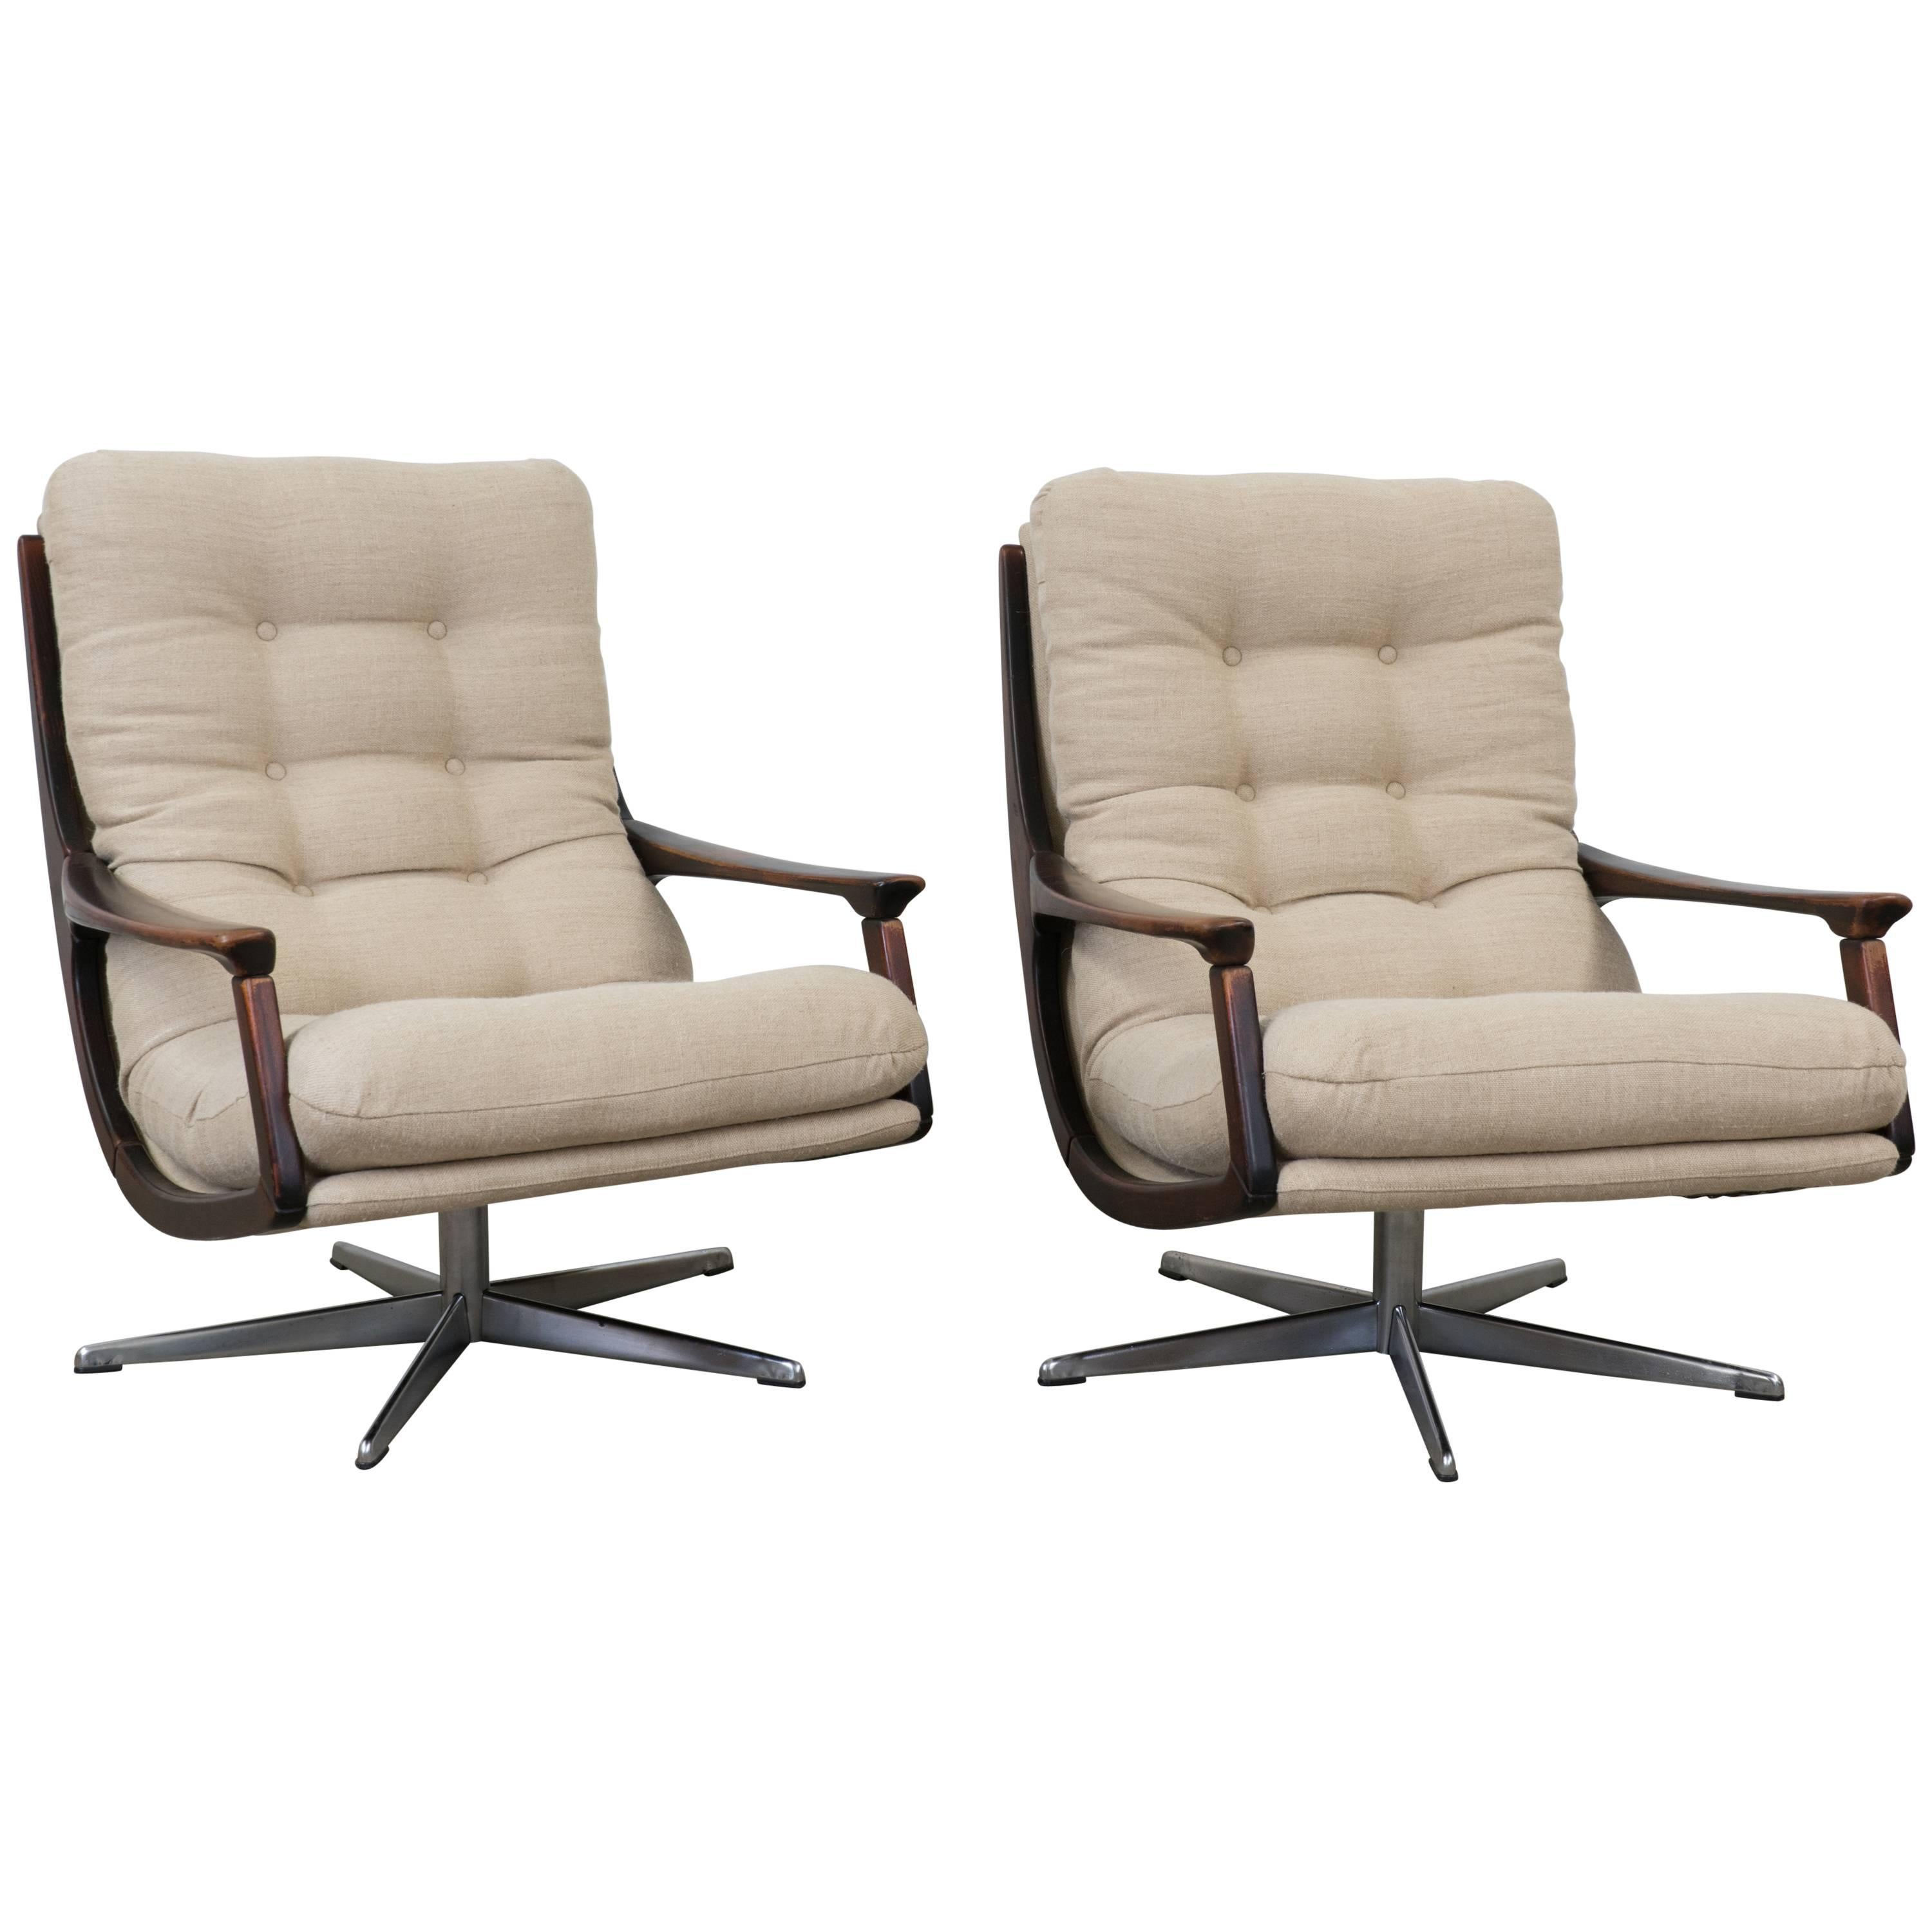 Pair of 1970s Swivel Chairs